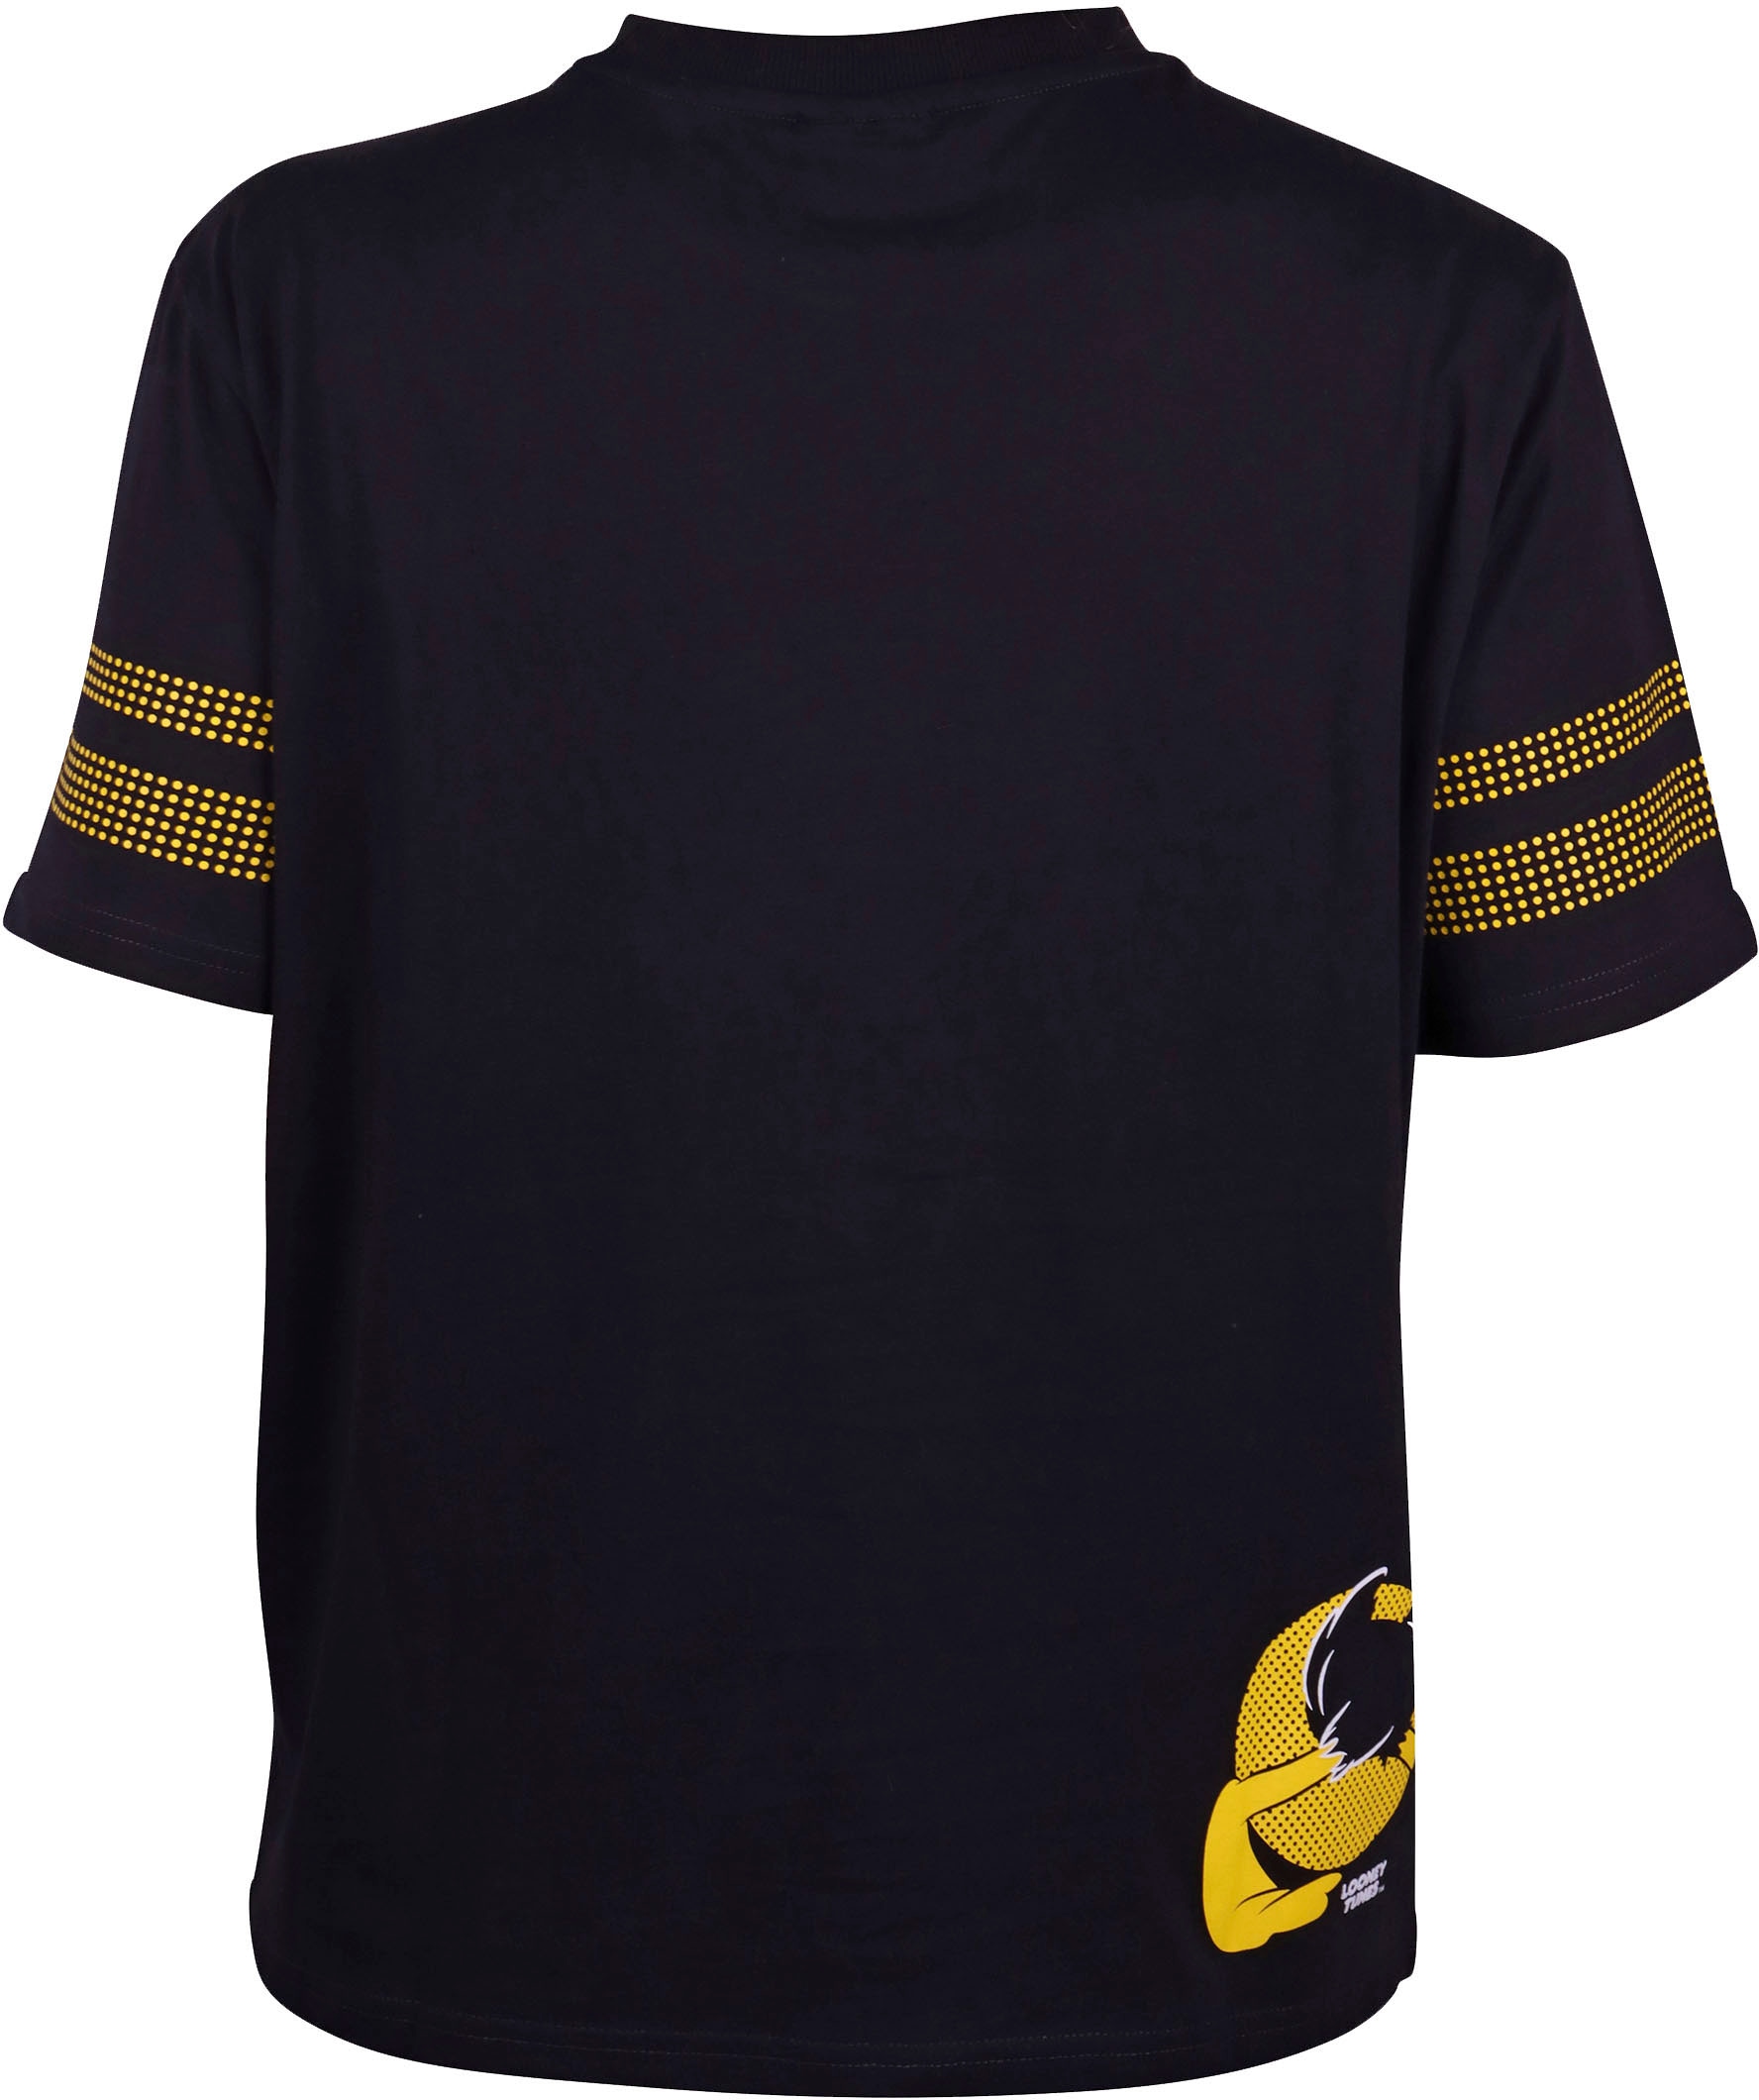 Capelli New York T-Shirt, Duffy Duck Motiv